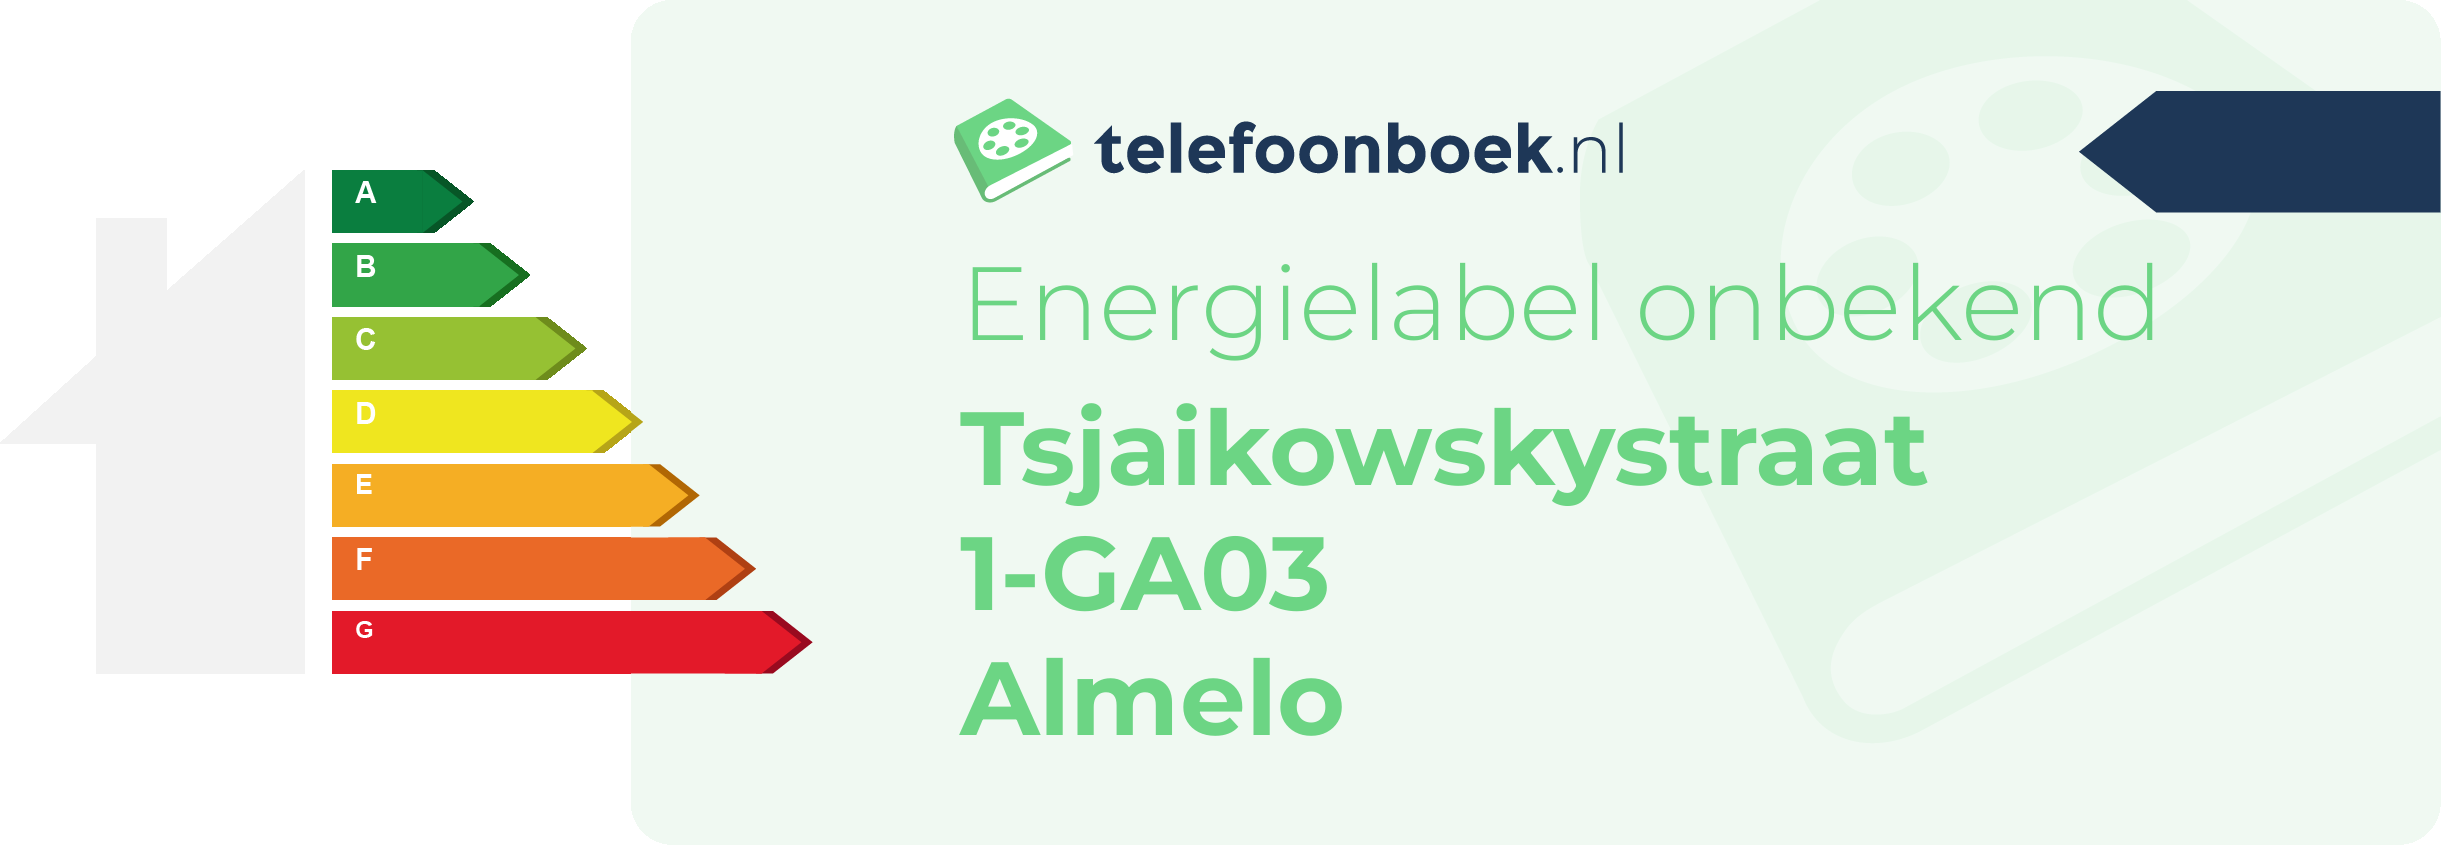 Energielabel Tsjaikowskystraat 1-GA03 Almelo